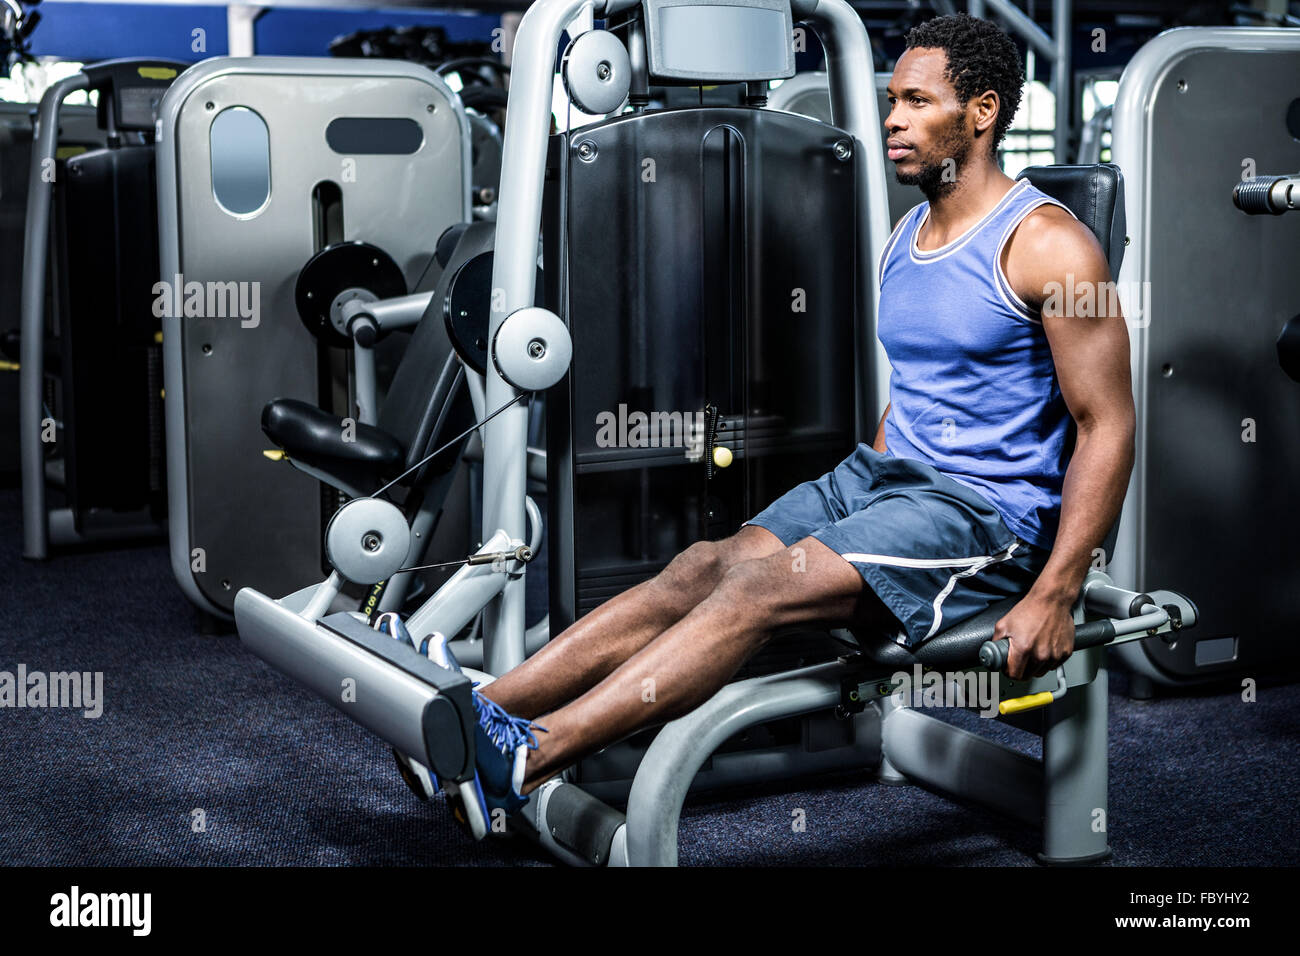 Serious muscular man using exercise machine Stock Photo